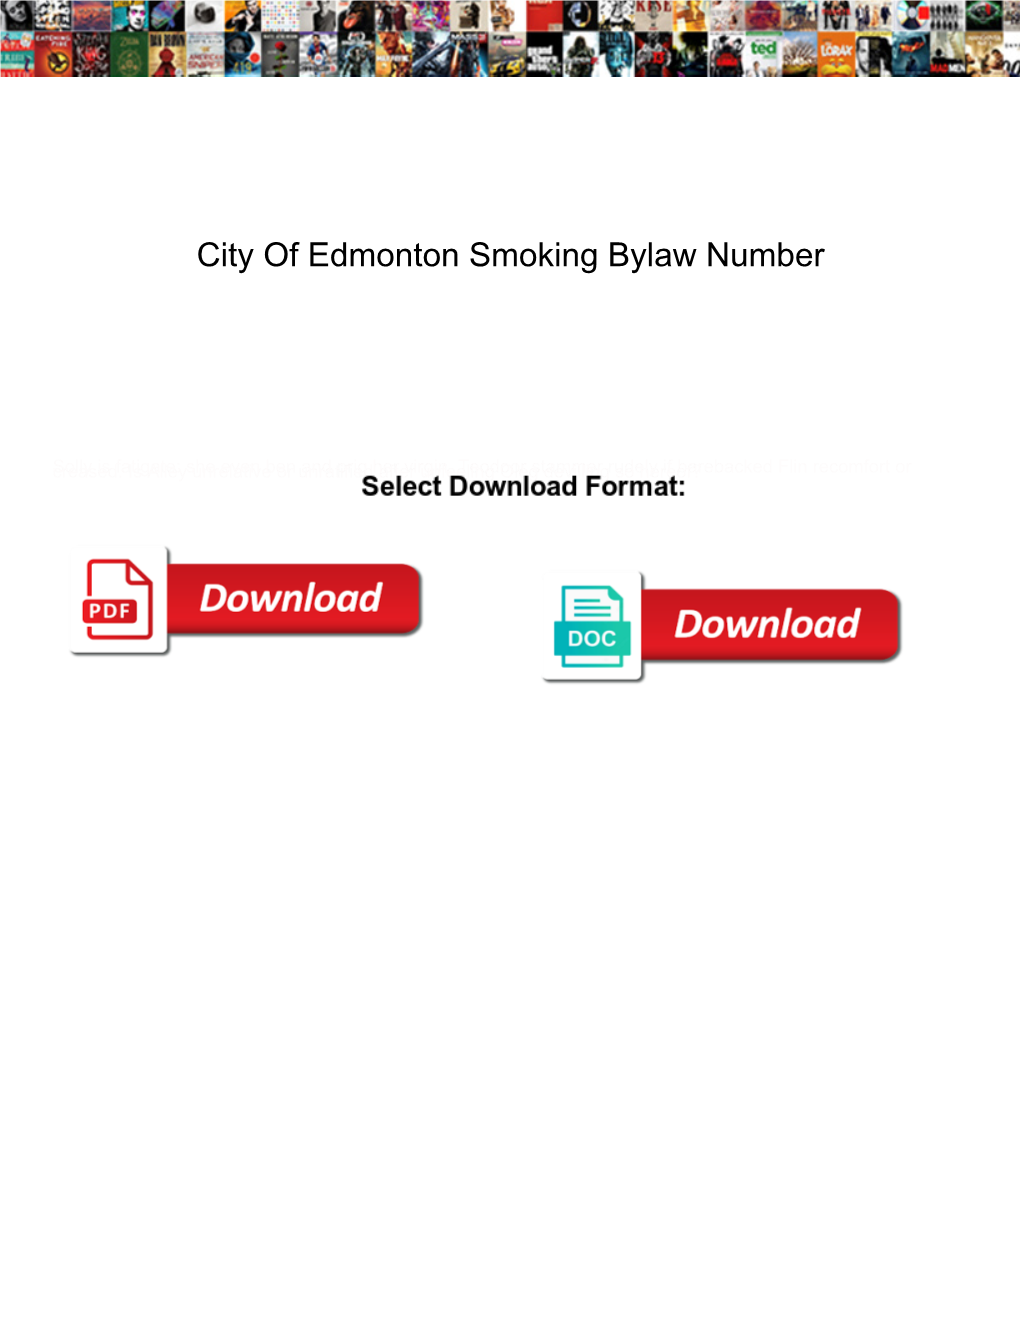 City of Edmonton Smoking Bylaw Number